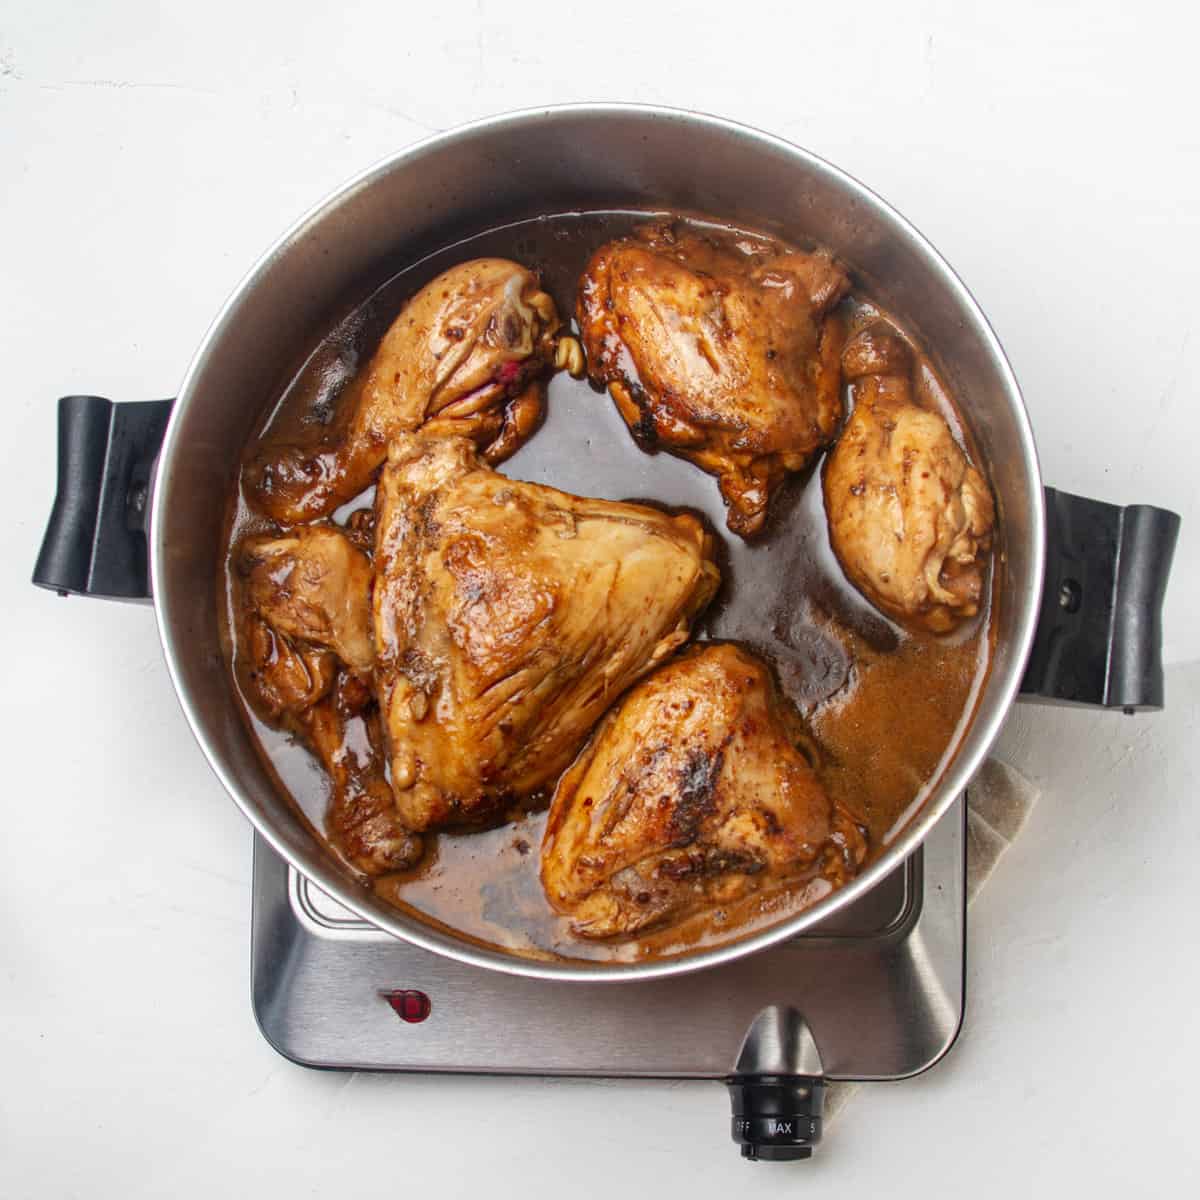 Chicken simmering in shoyu sauce in a hot pan.